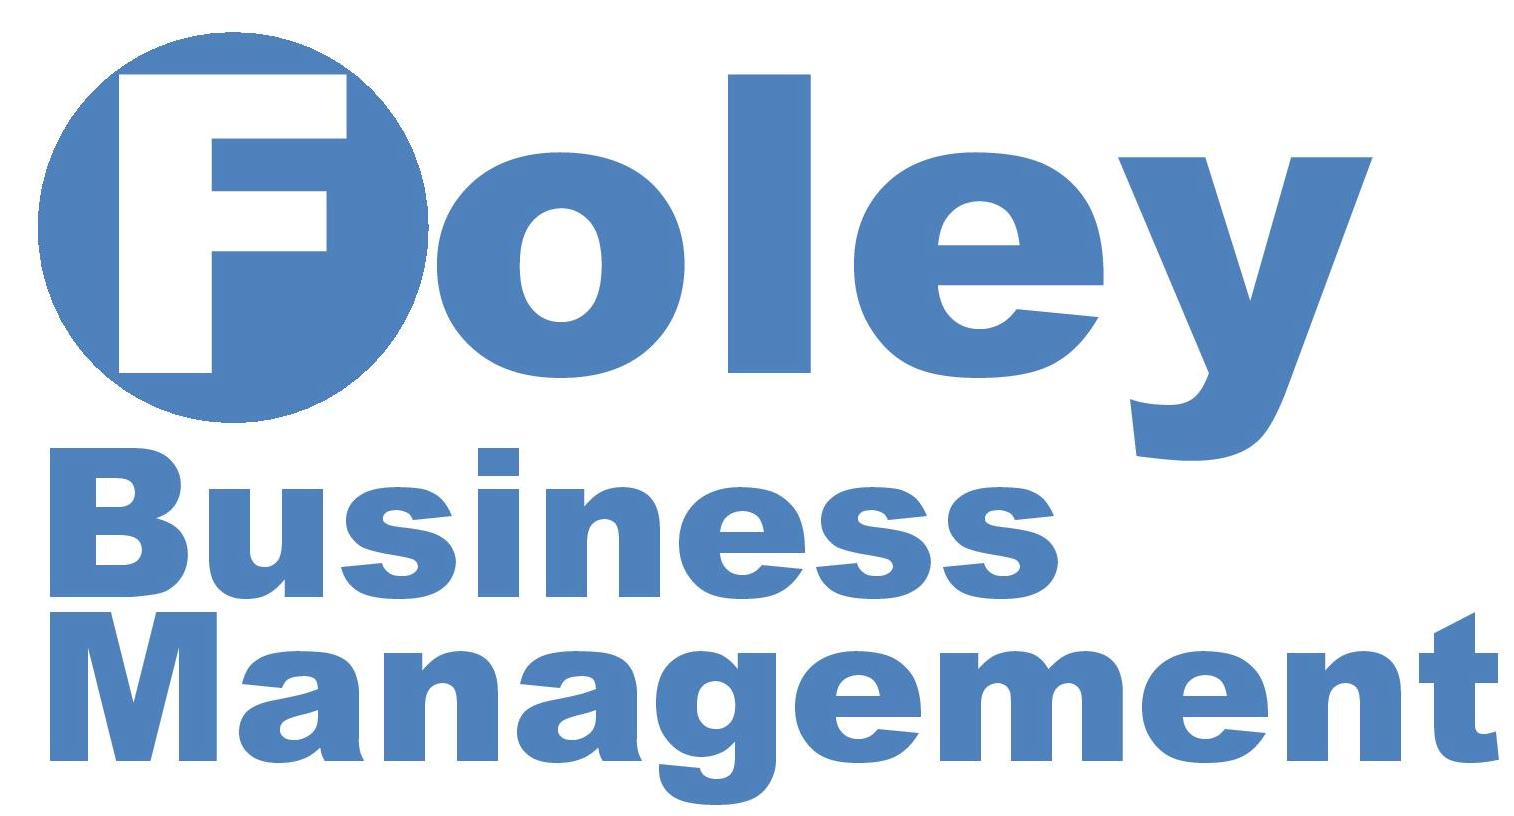 Foley Business Management